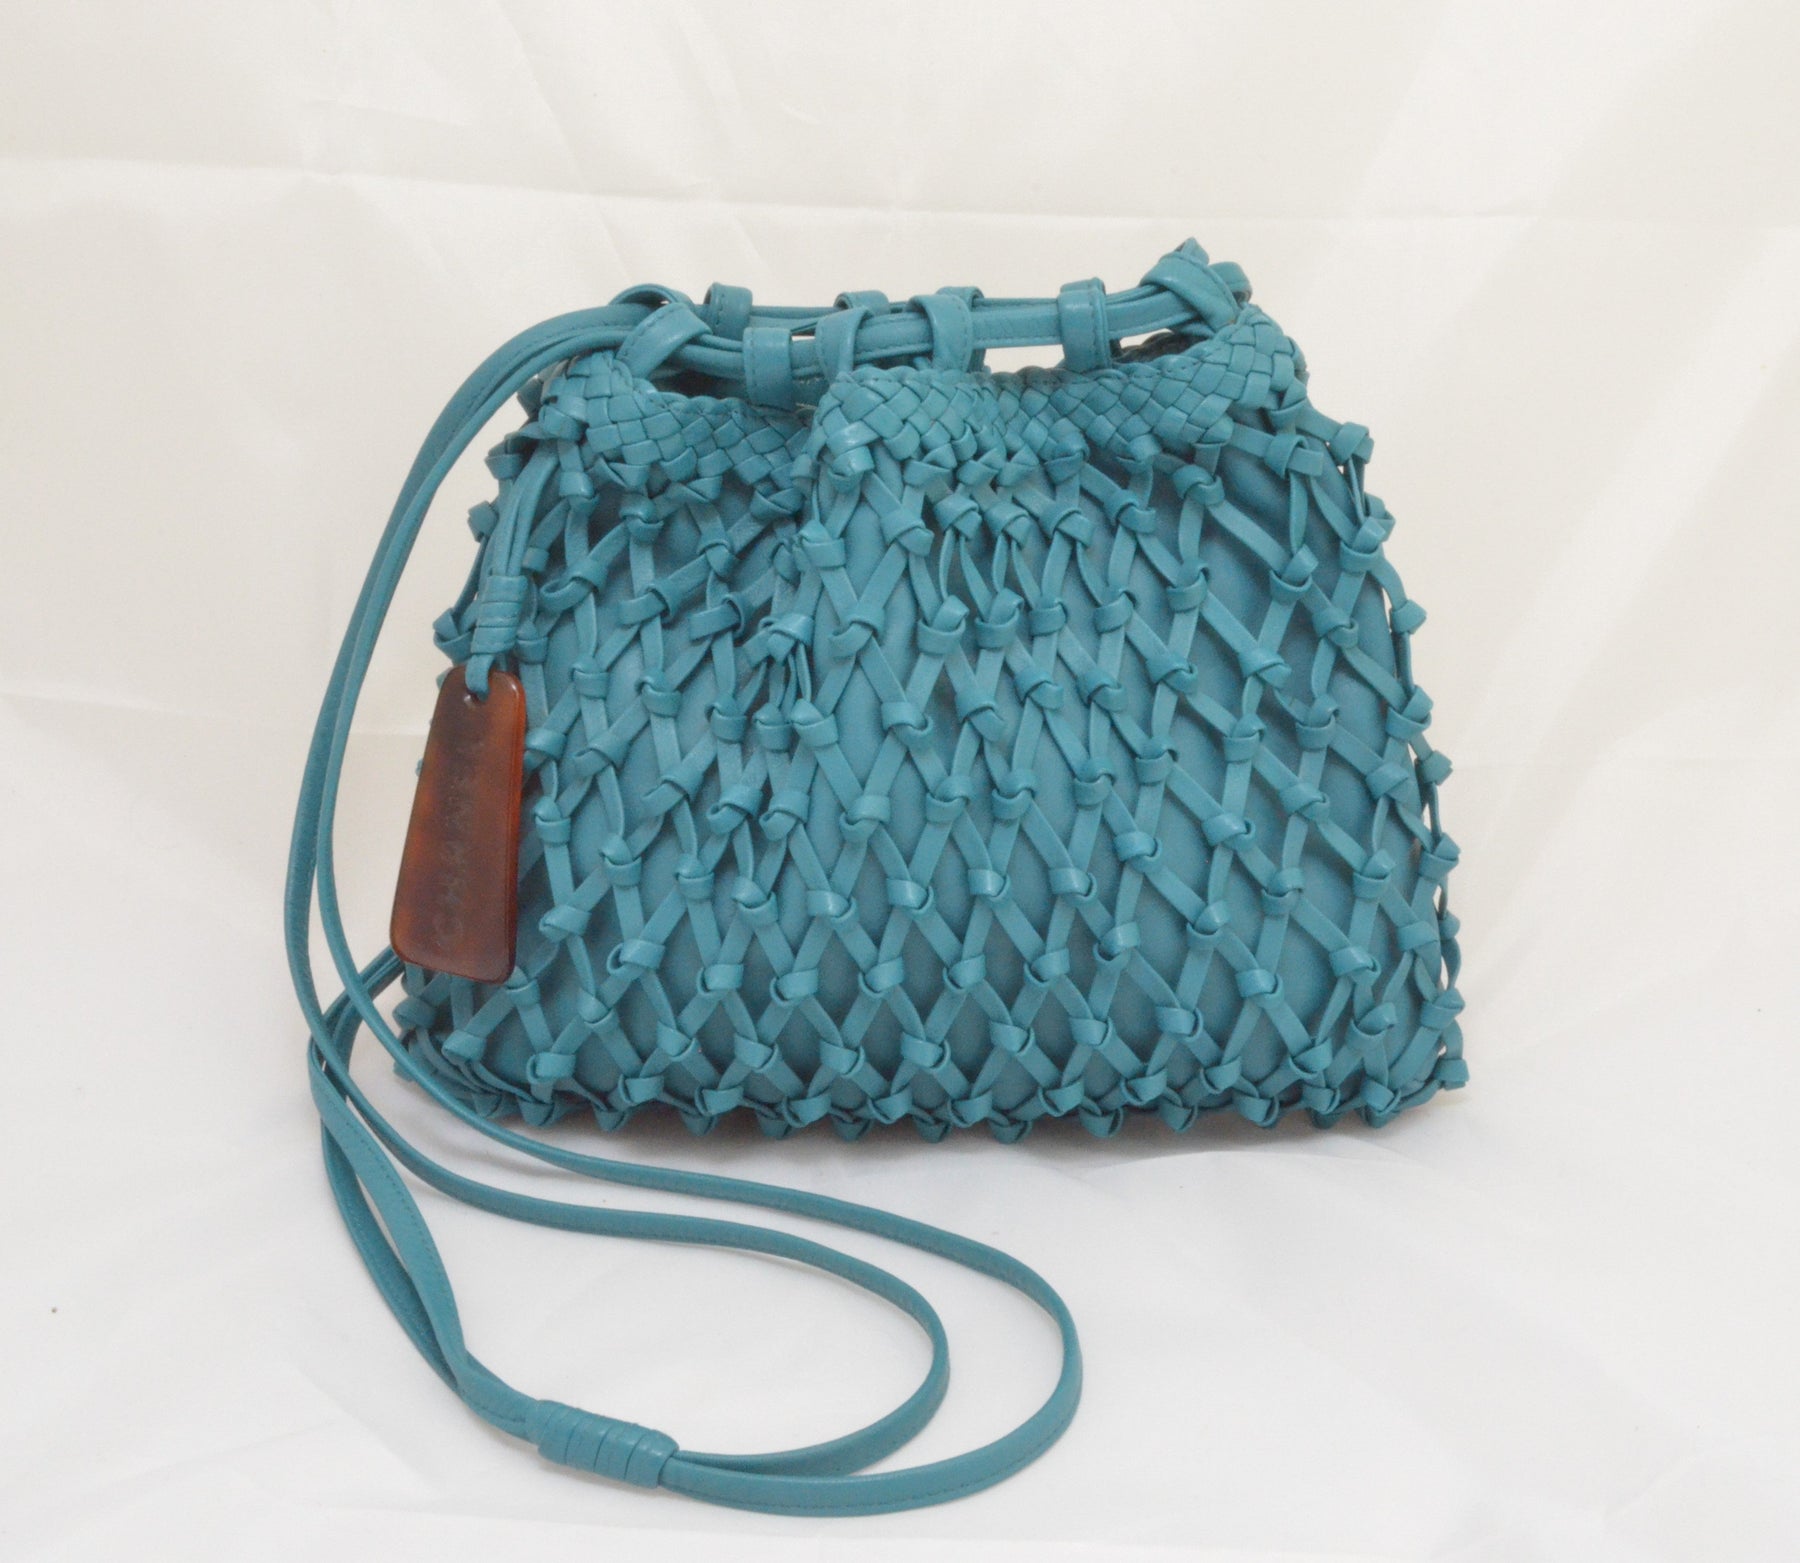 Explore our Chanel Fancy Crochet Flap Bag w/ Box Chanel collection